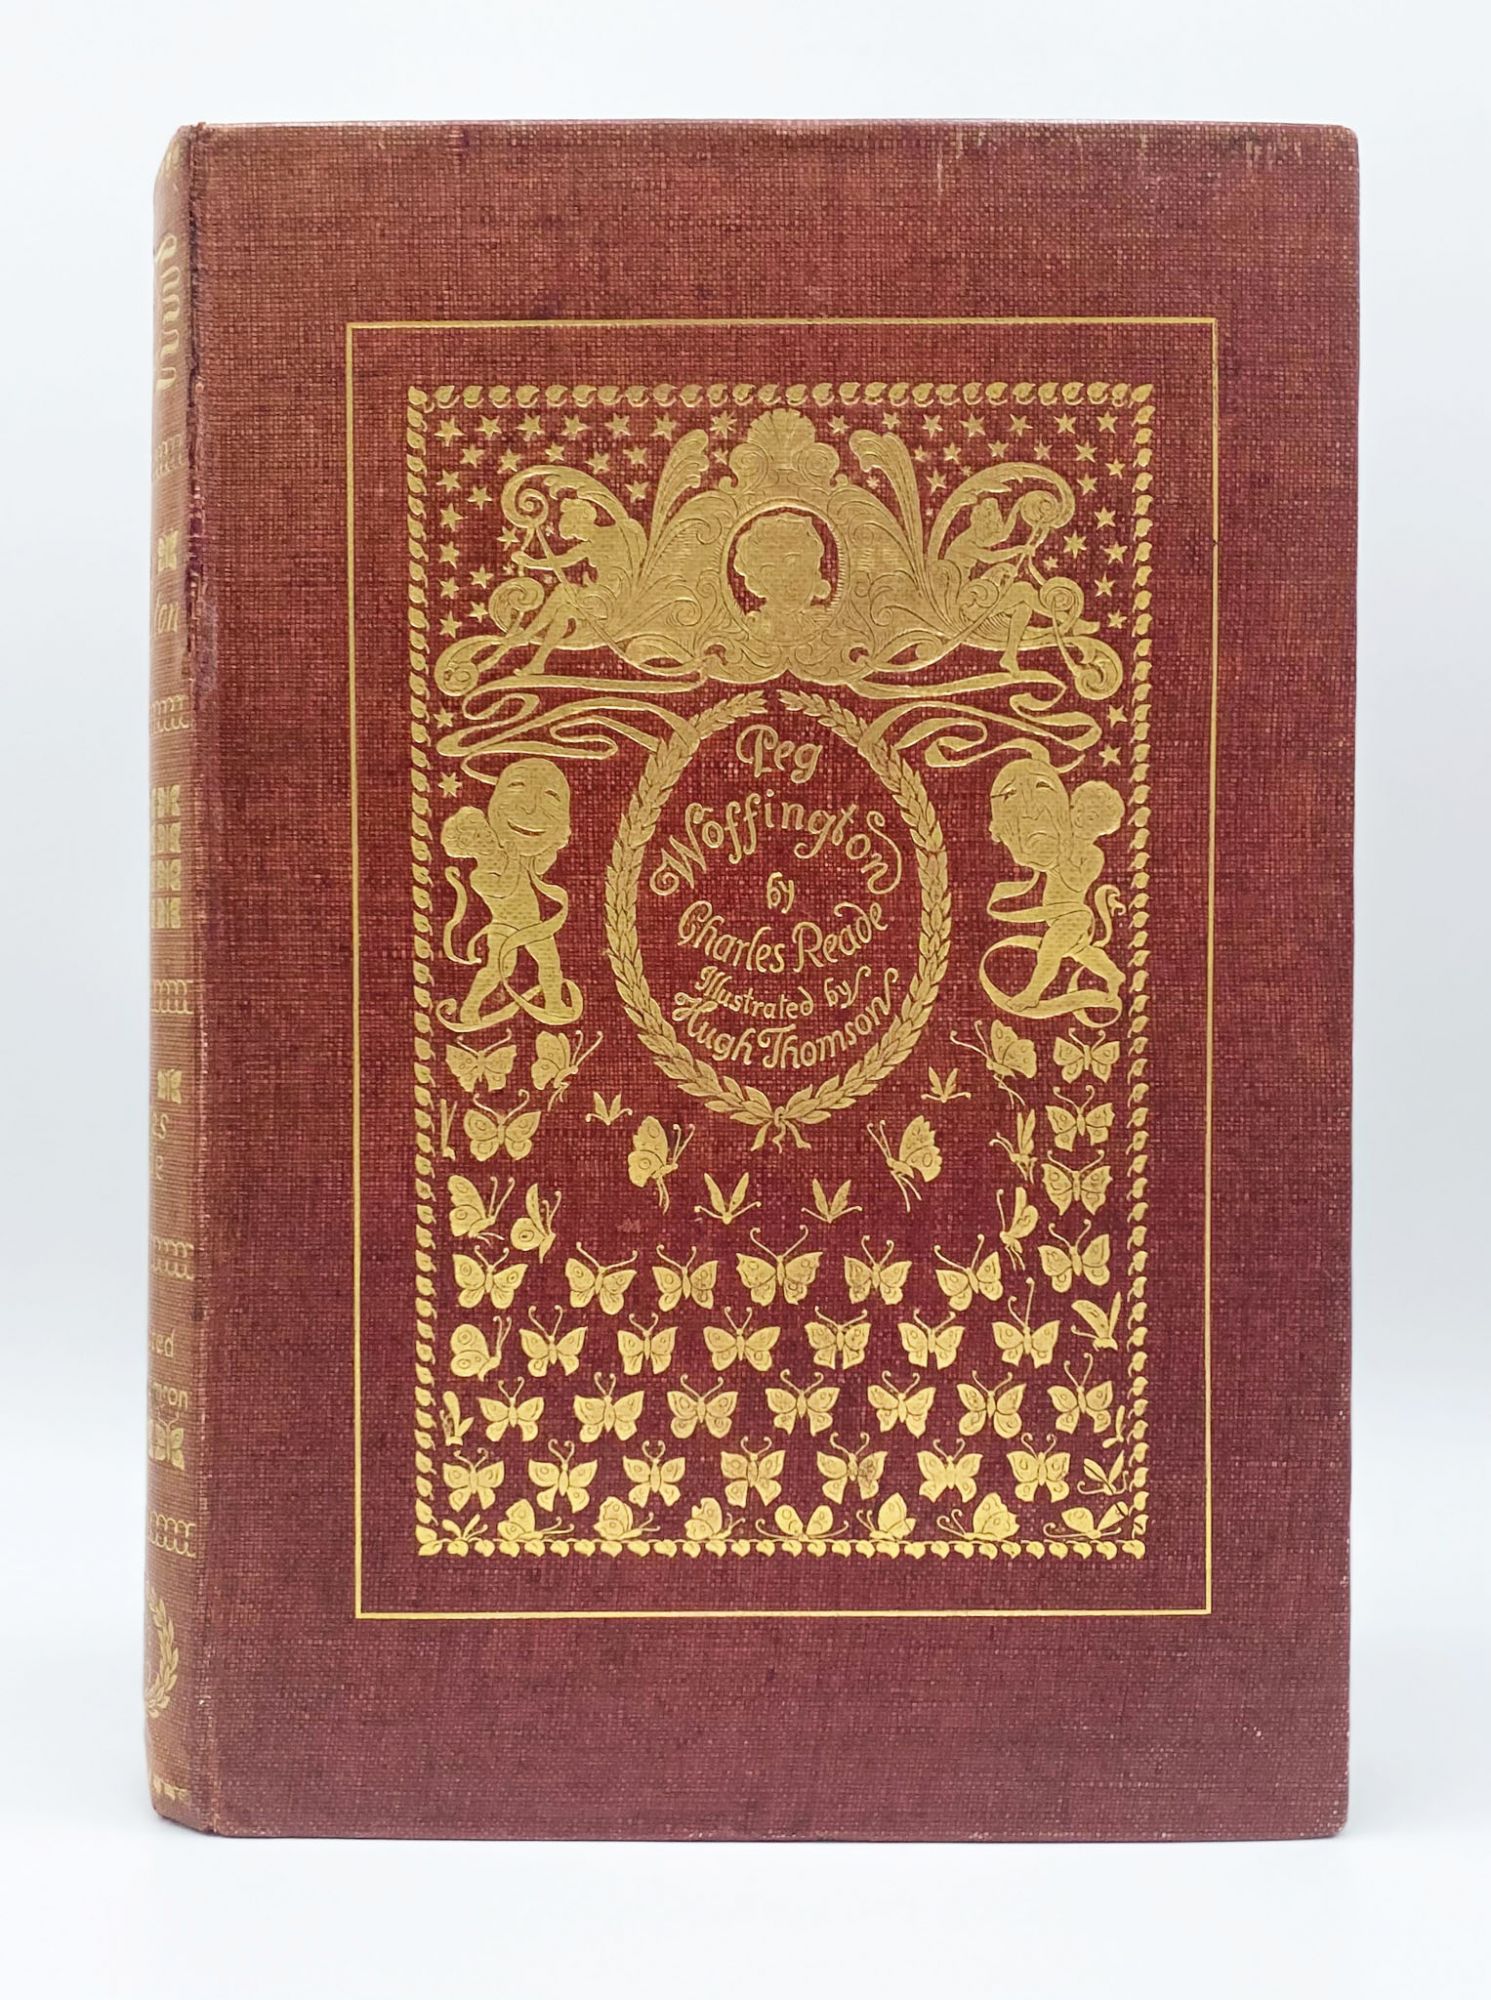 1899 Peg Woffington Charles Reade Illustrated by Hugh Thomson Austin Dobson 